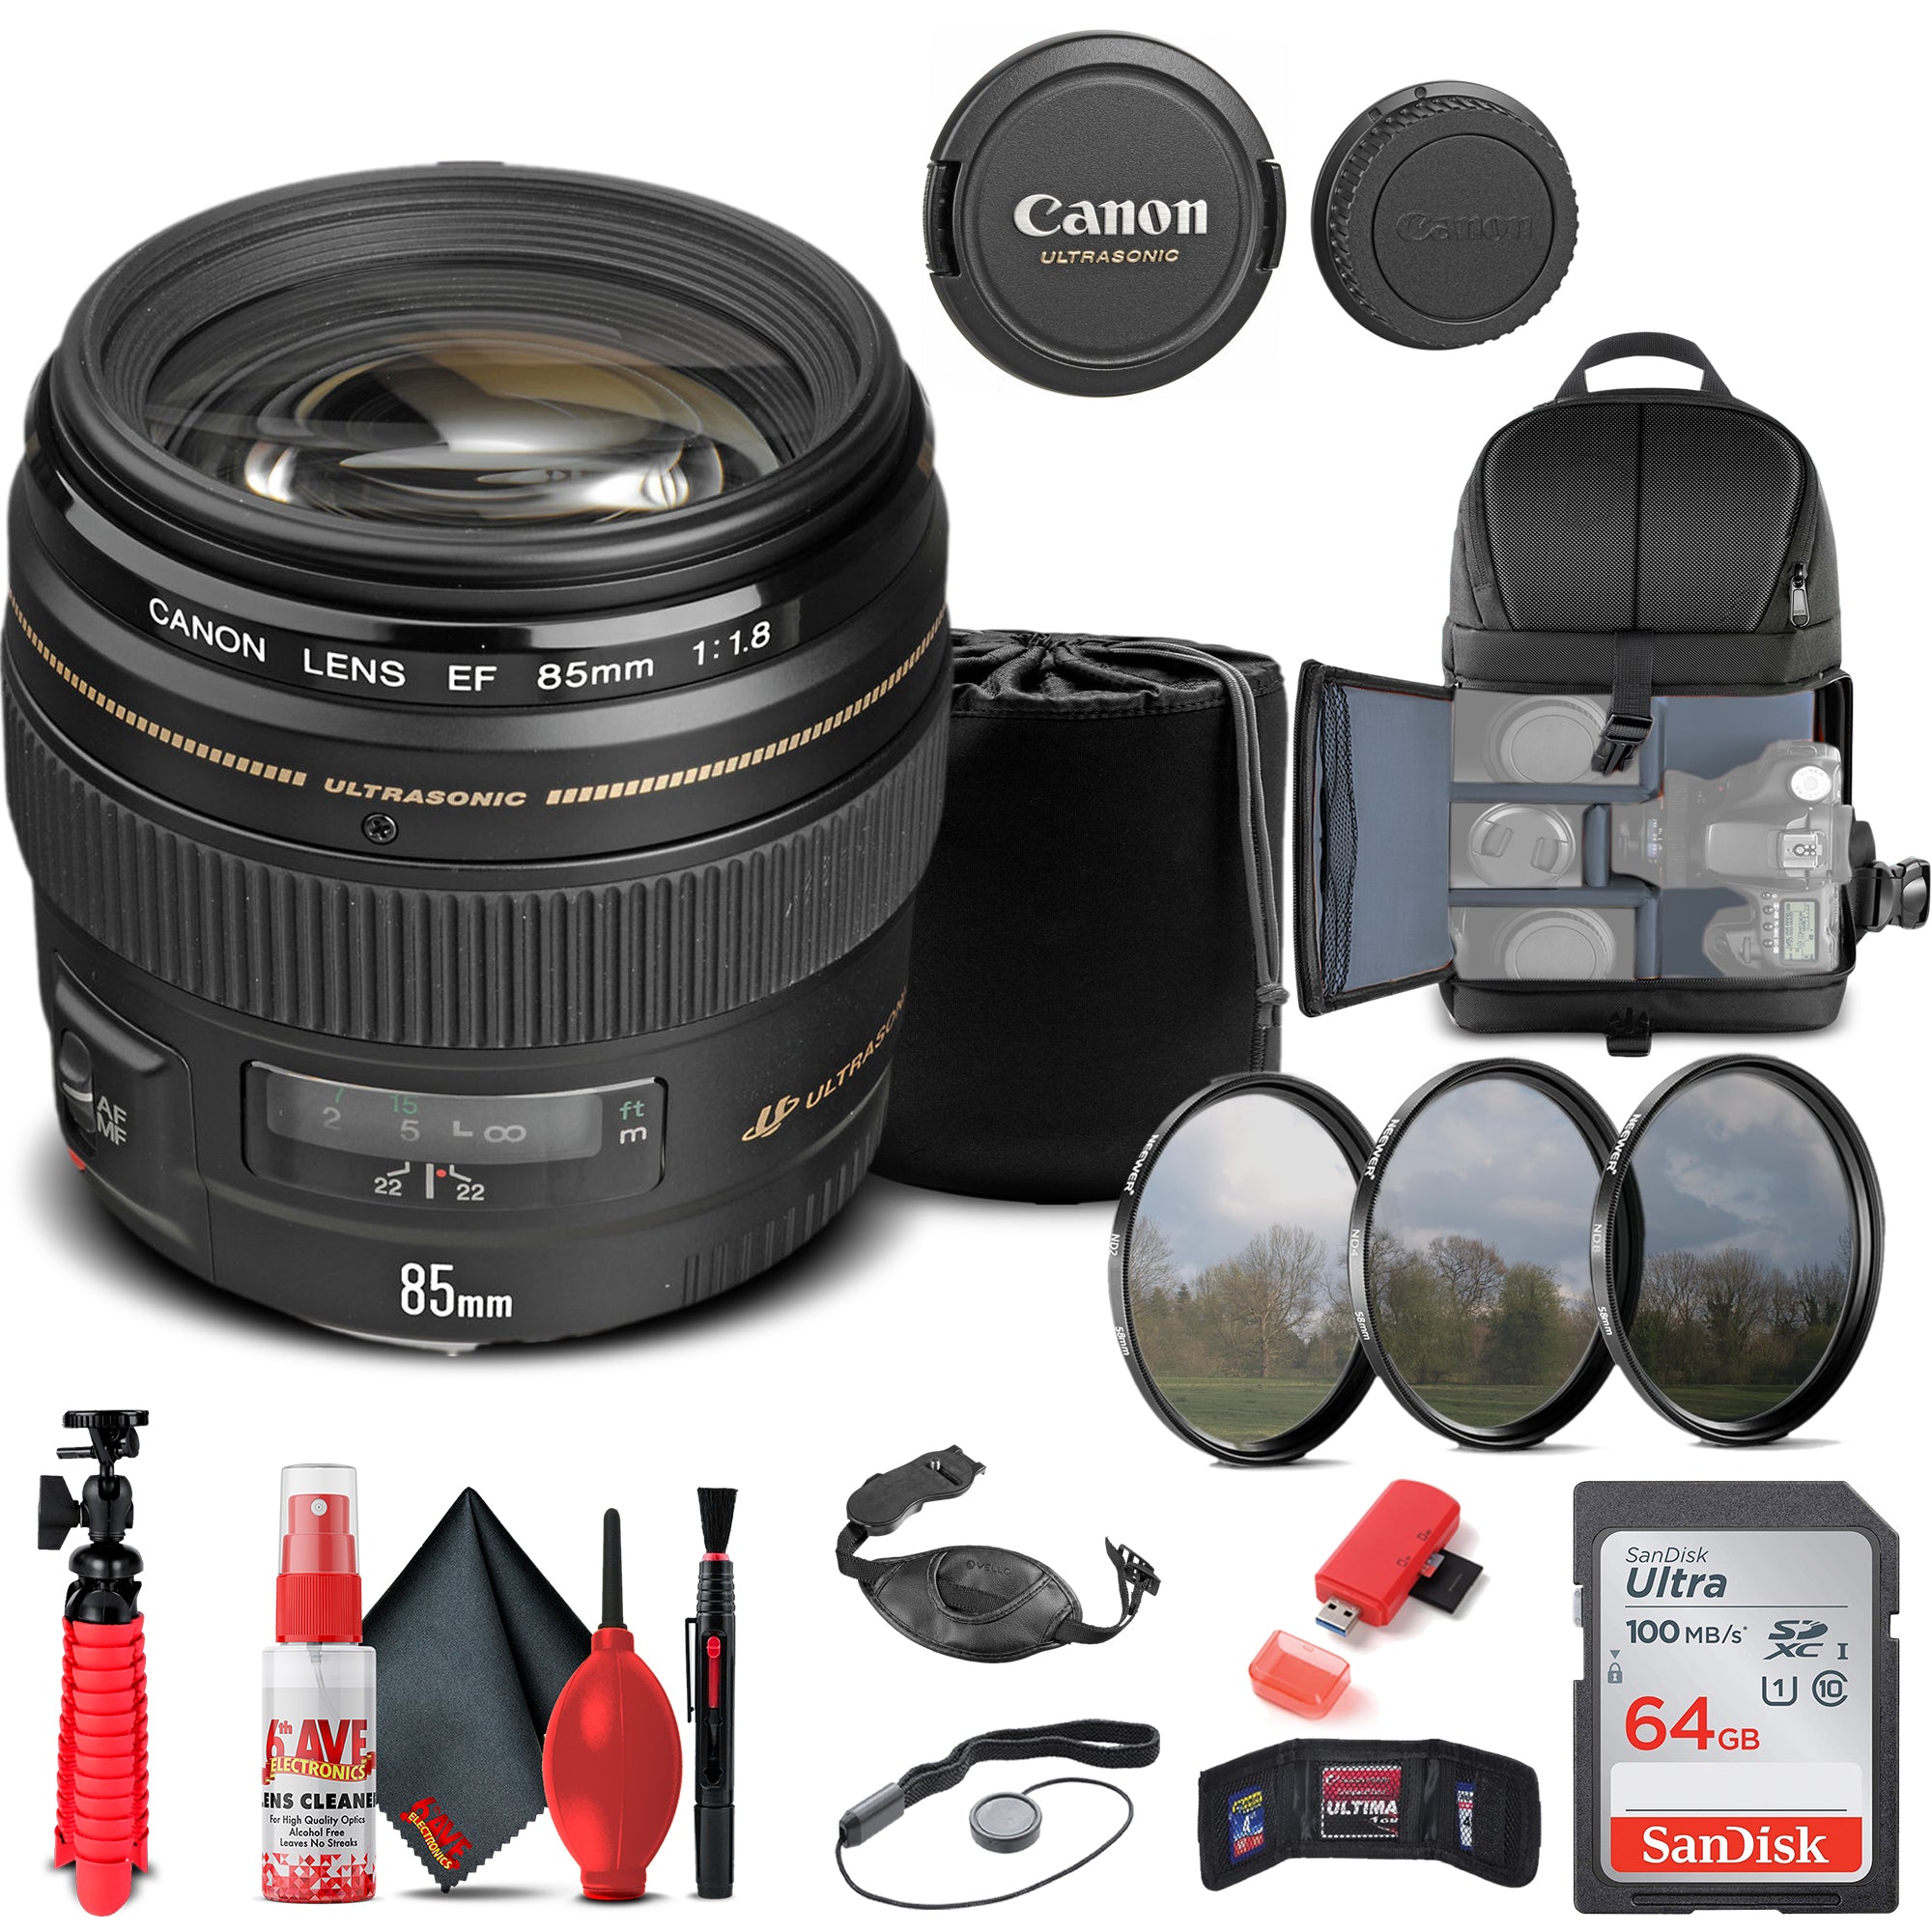 Canon EF 85mm f/1.8 USM Lens (2519A003) + Filter + BackPack + 64GB Card + More